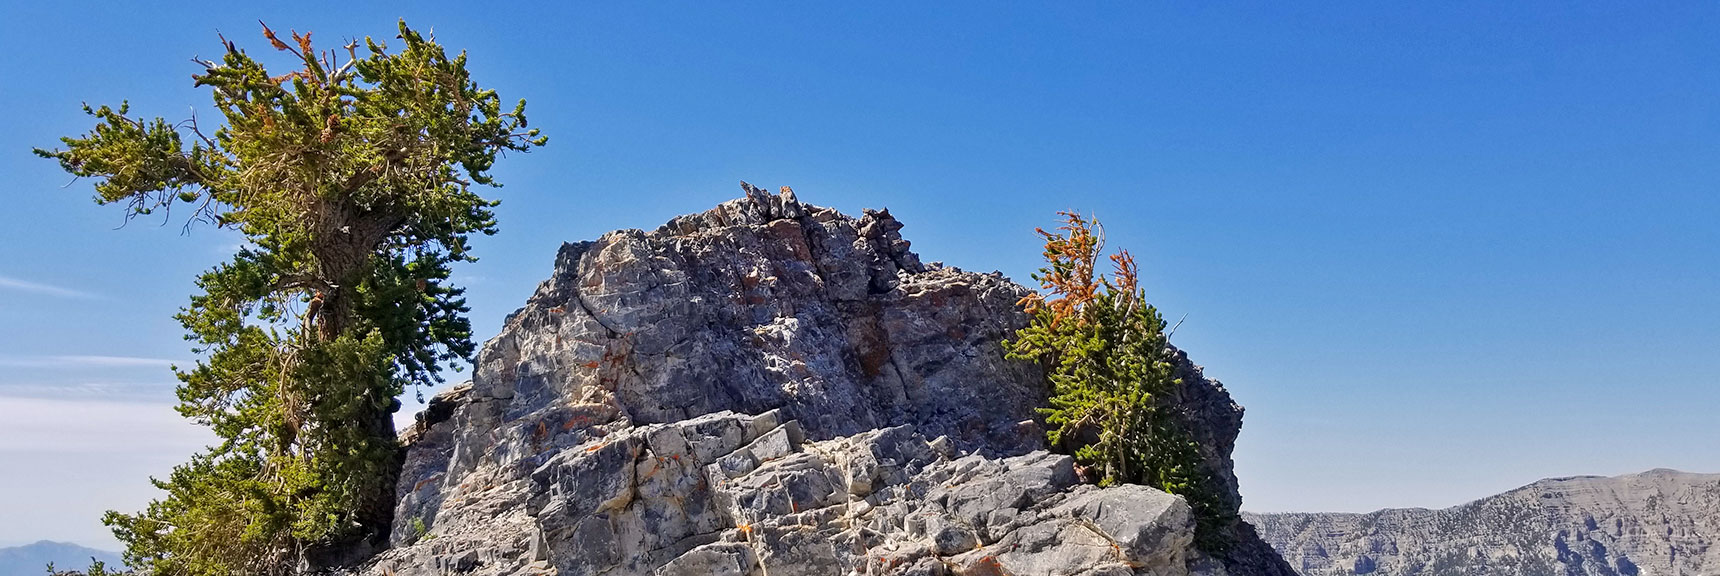 Granite Height on Mummy's Knees | Mummy Mountain's Knees | Mt. Charleston Wilderness, Nevada 020